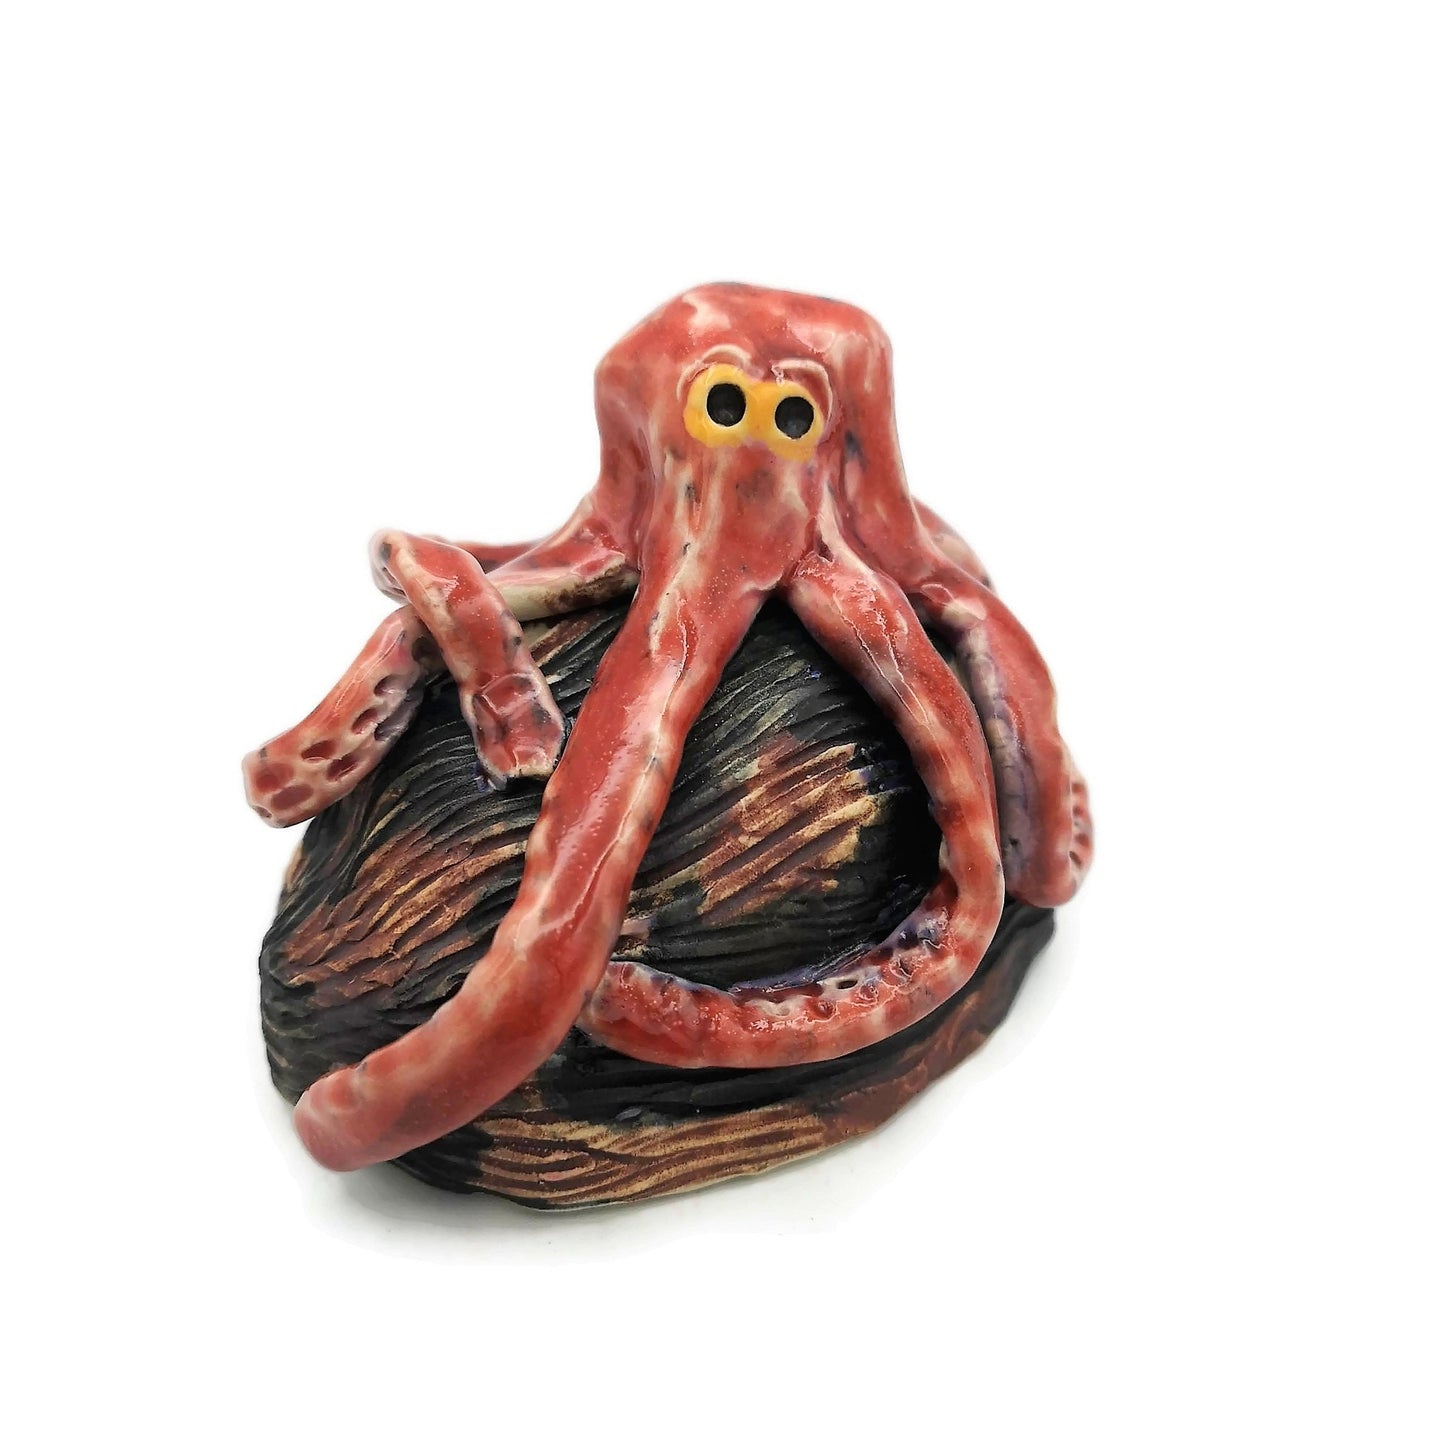 Modern Handmade Ceramic Sculpture, Octopus Contemporary Art, Custom Fish Tank Decor, Coastal Decor Table Sculpture, Aquarium Decor - Ceramica Ana Rafael